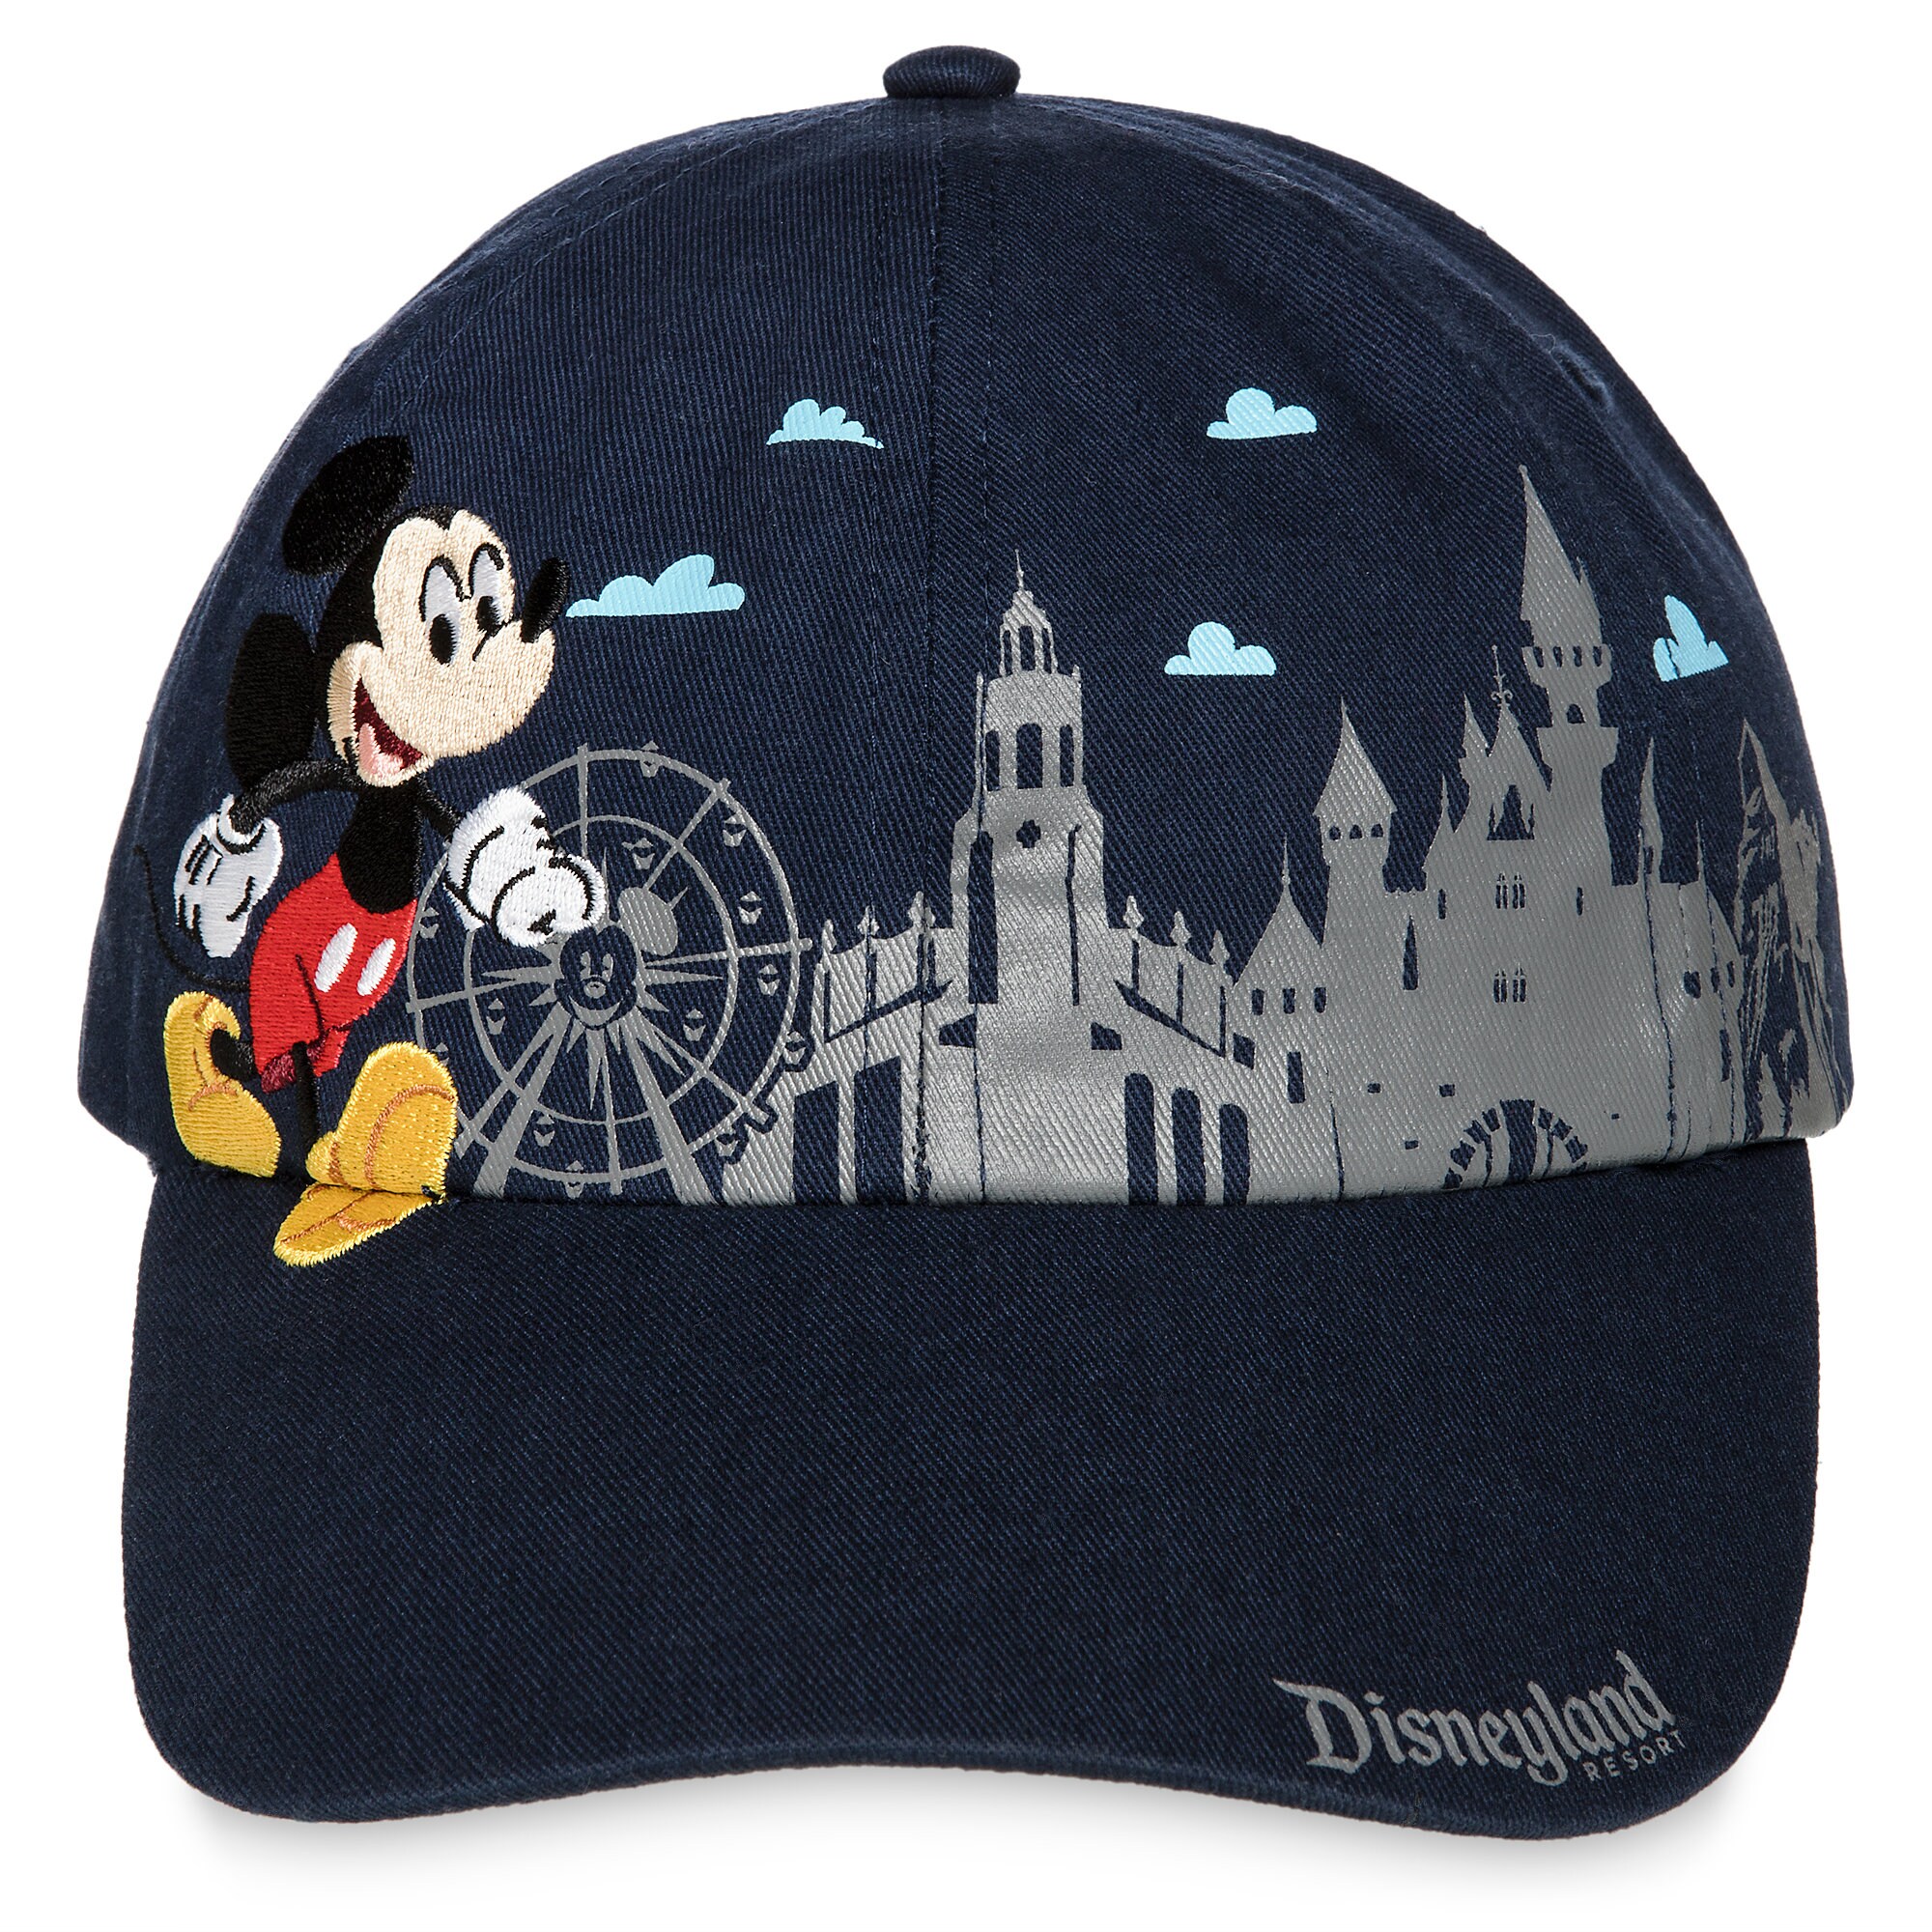 Mickey Mouse Baseball Cap for Kids - Disneyland 2019